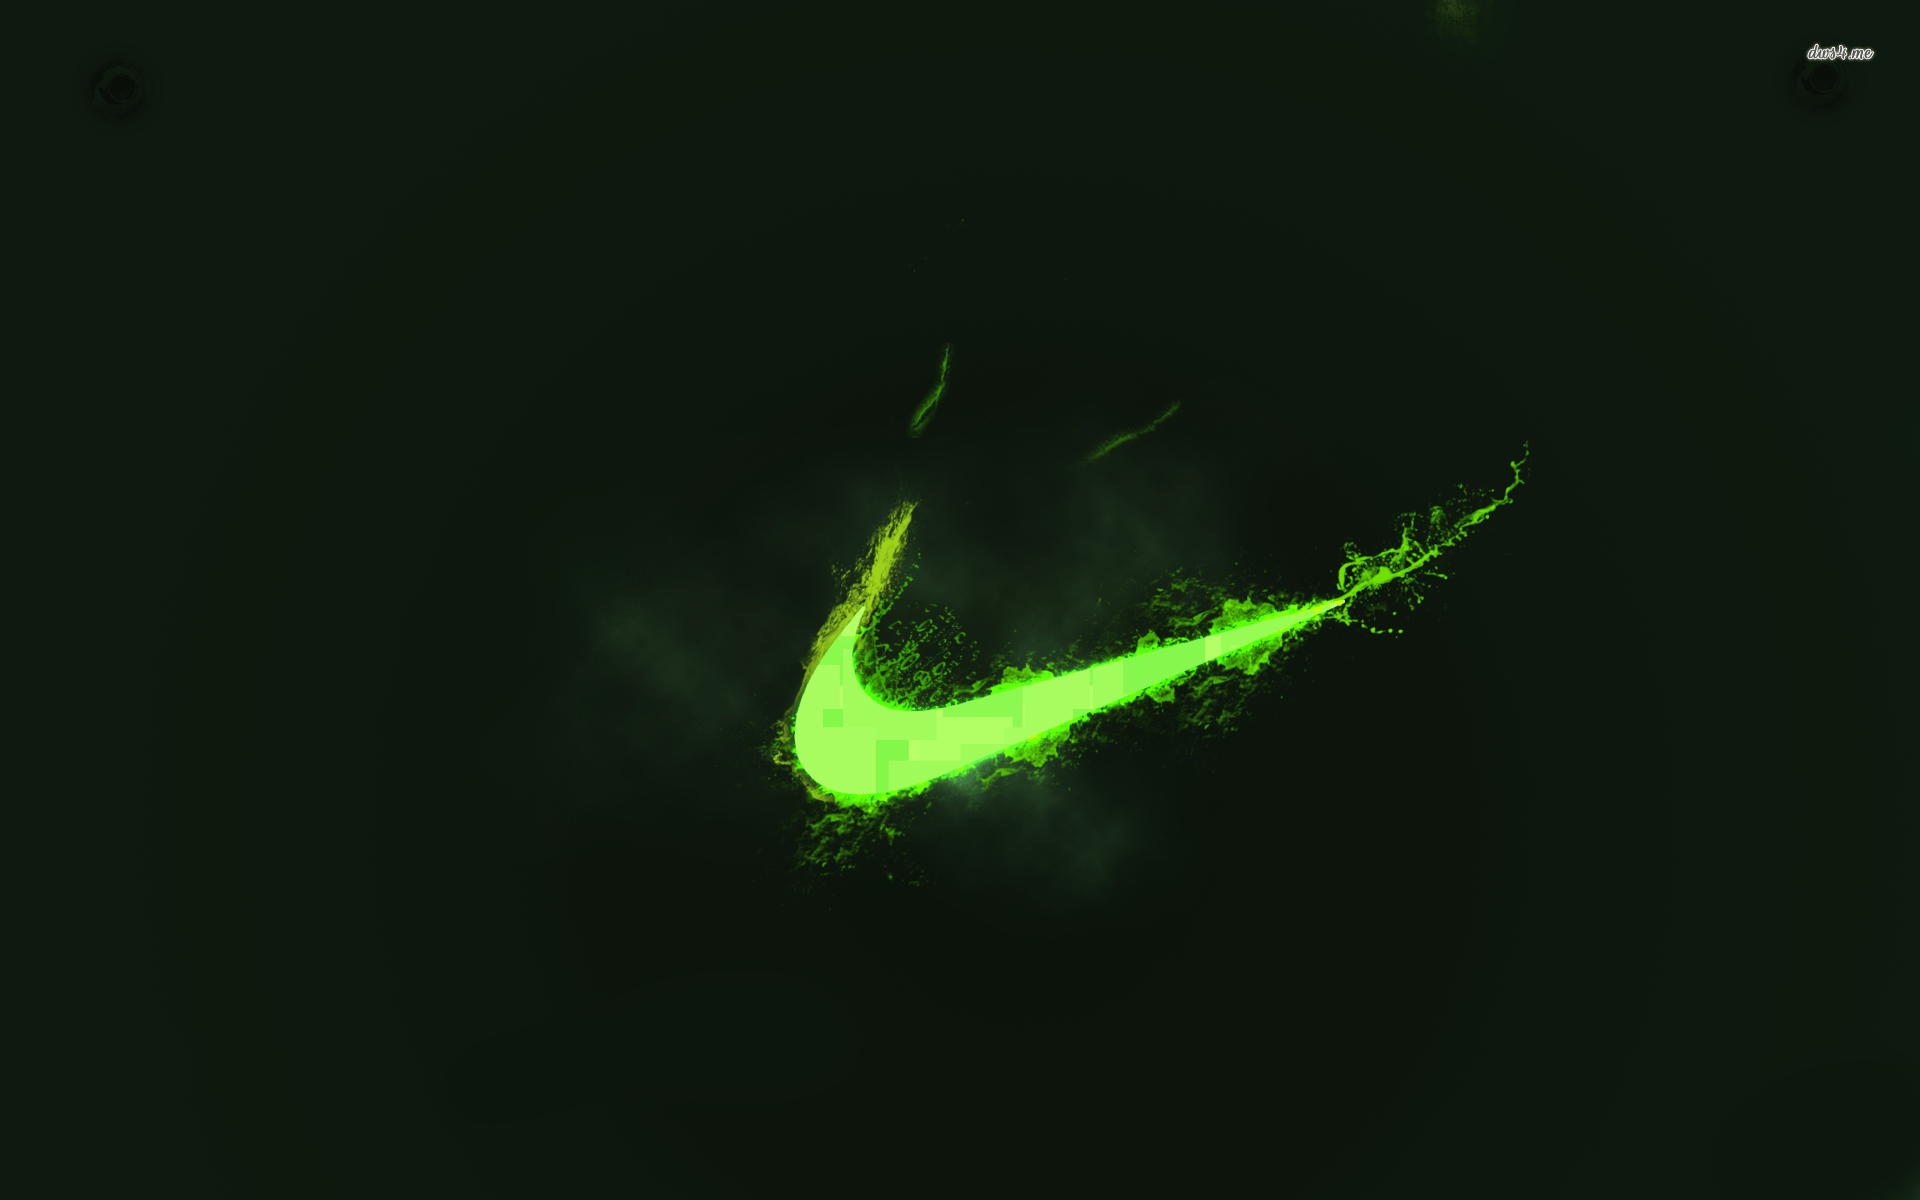 20478 Neon Green Nike Logo 1920x1200 Digital Art Wallpaper.png 1920